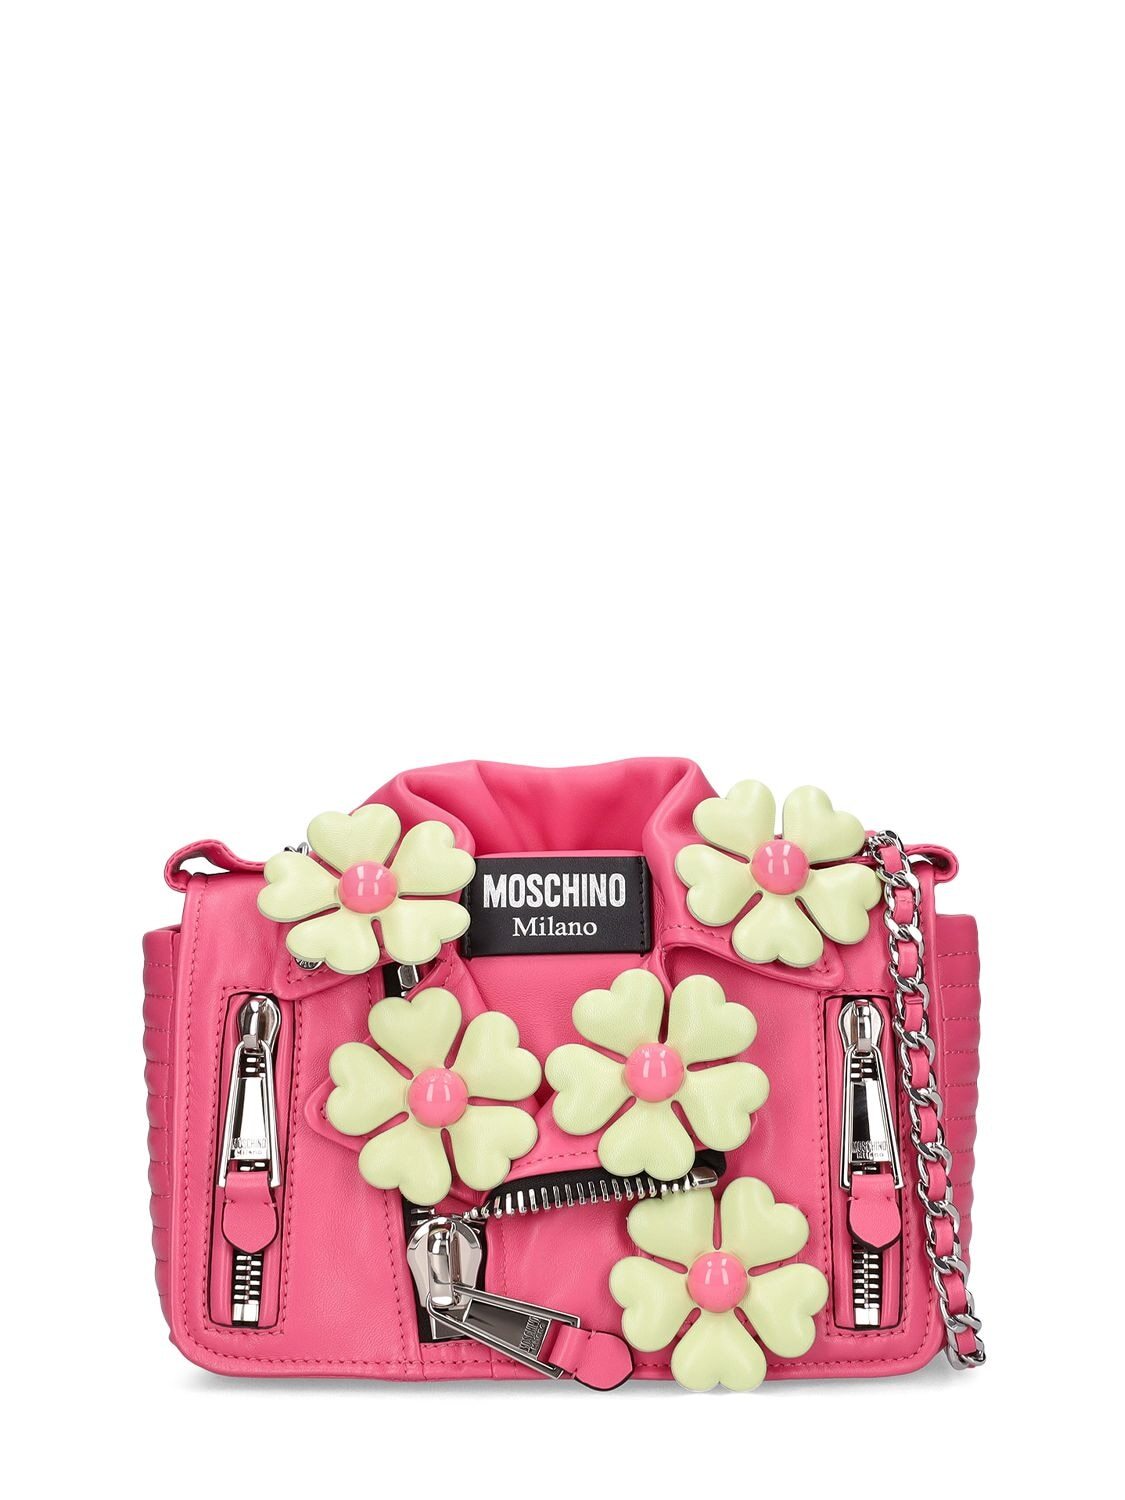 MOSCHINO Biker Flower Leather Shoulder Bag in pink